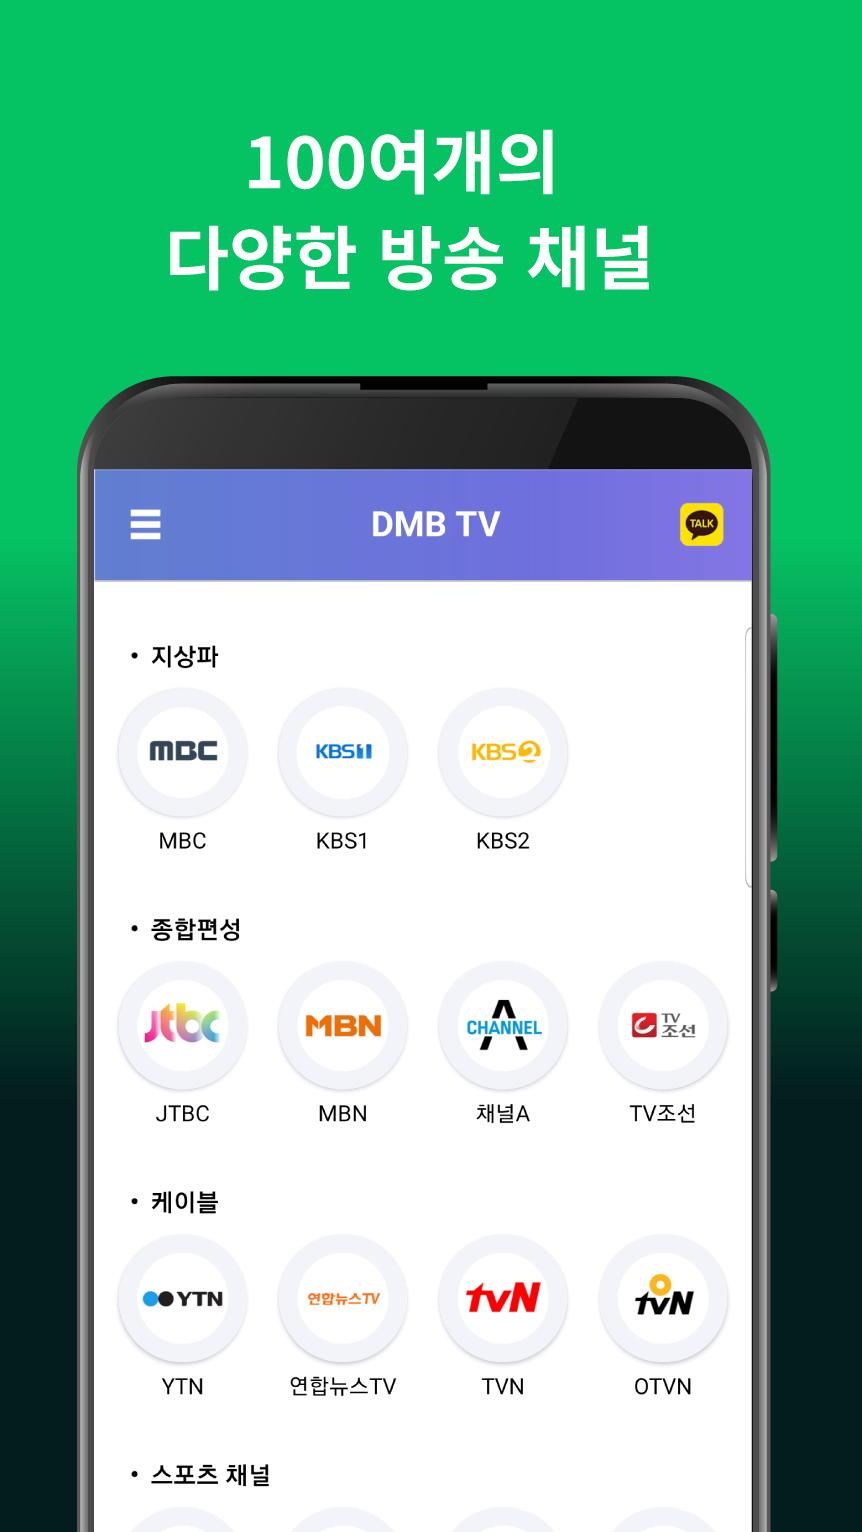 DMB TV 실시간무료TV, 실시간TV 방송, 지상파, 디엠비 방송시청, 모바일 무료티비 1.0.1 Screenshot 2